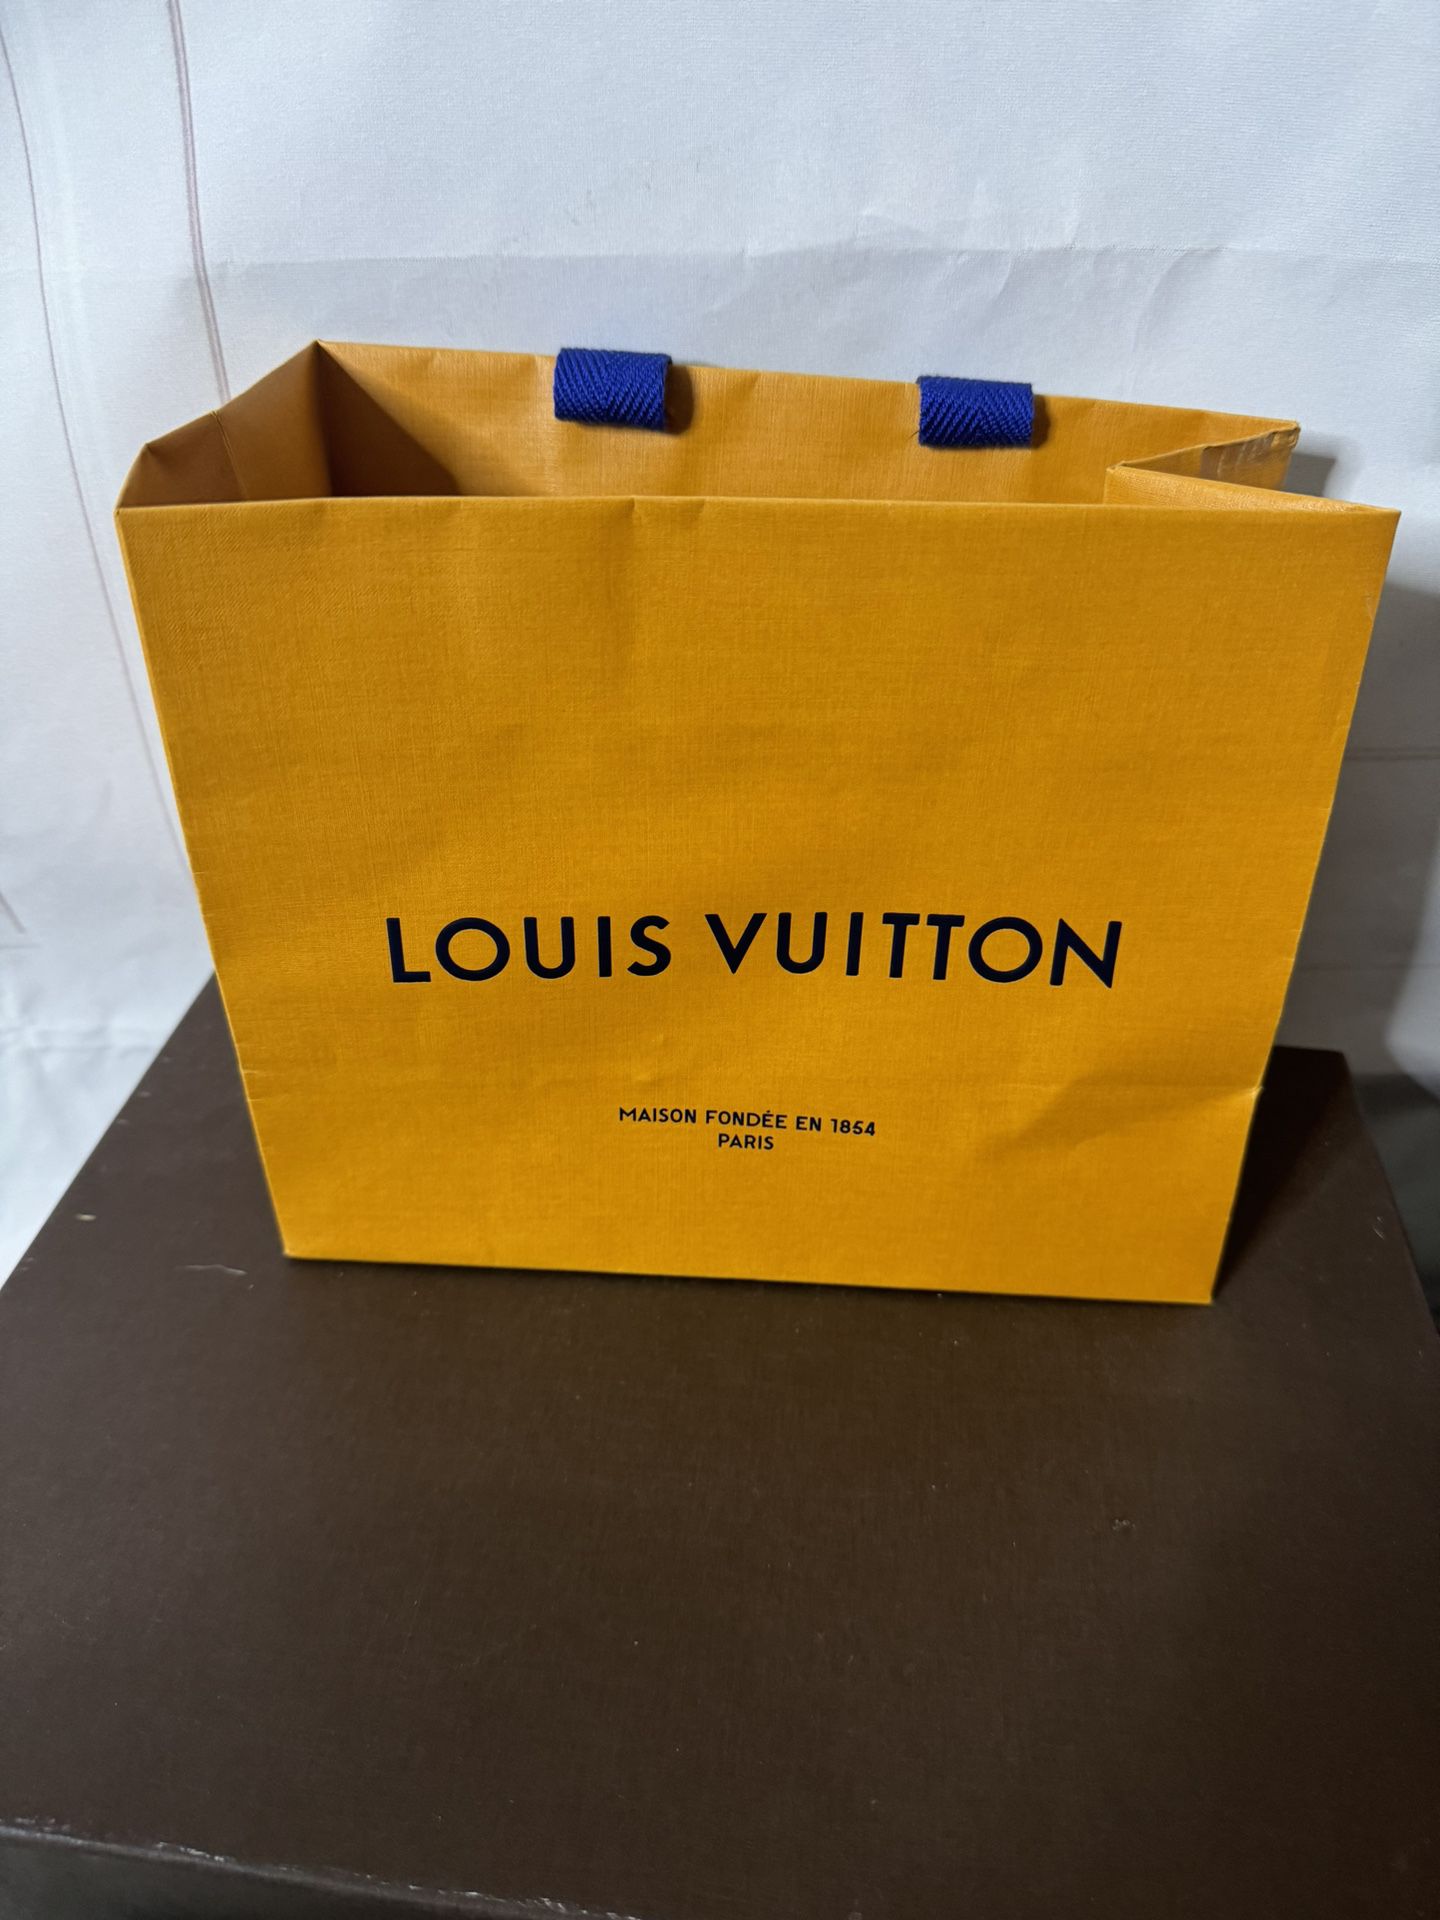 Louis Vuitton Shopping Bag